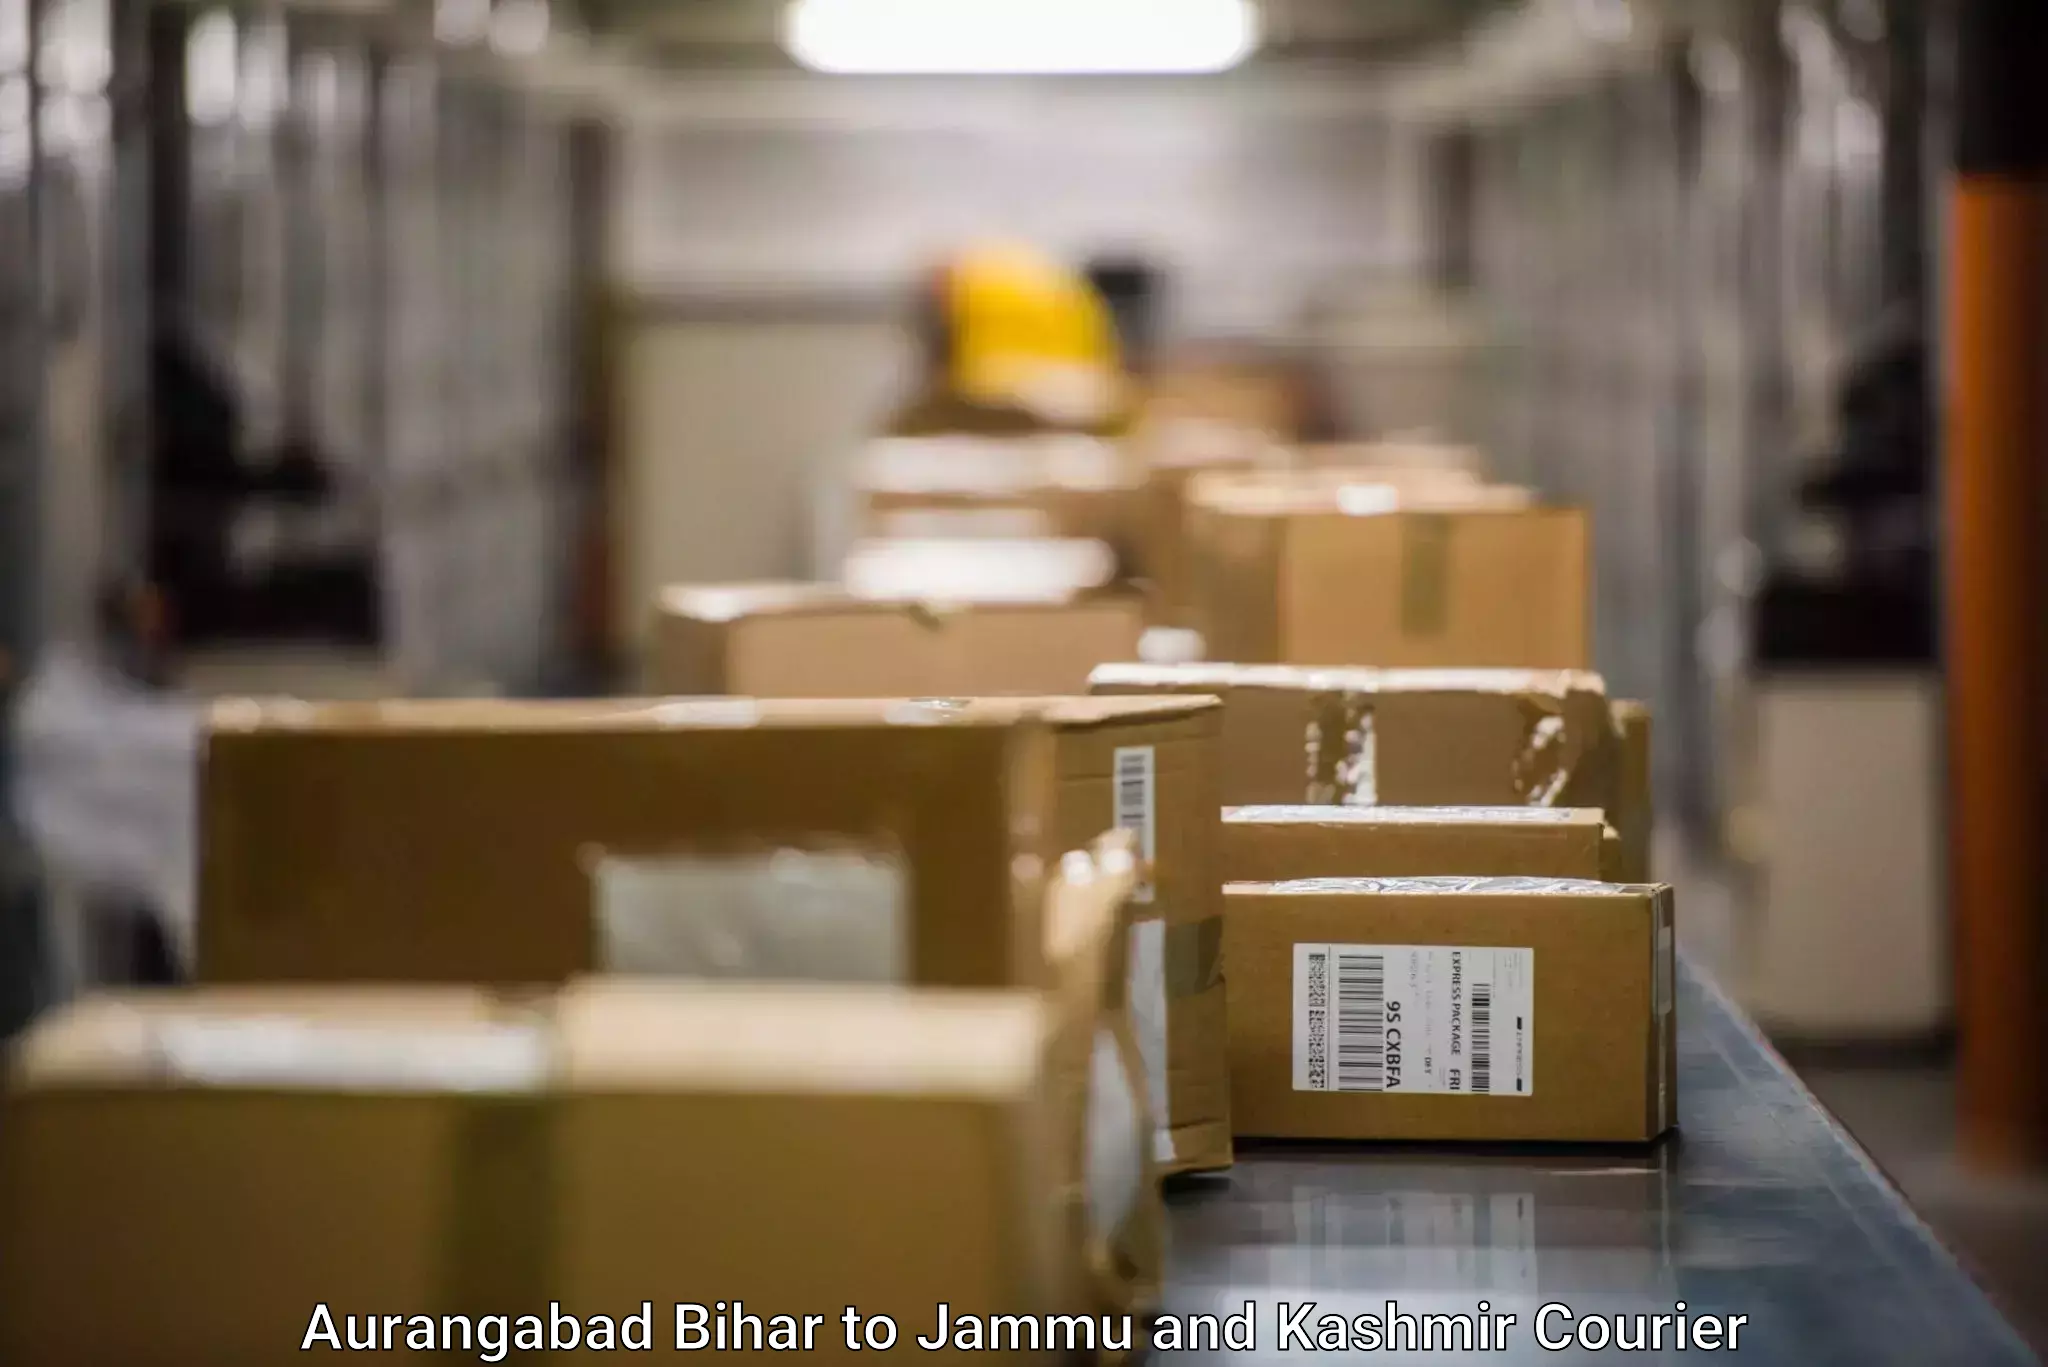 International parcel service Aurangabad Bihar to Kargil